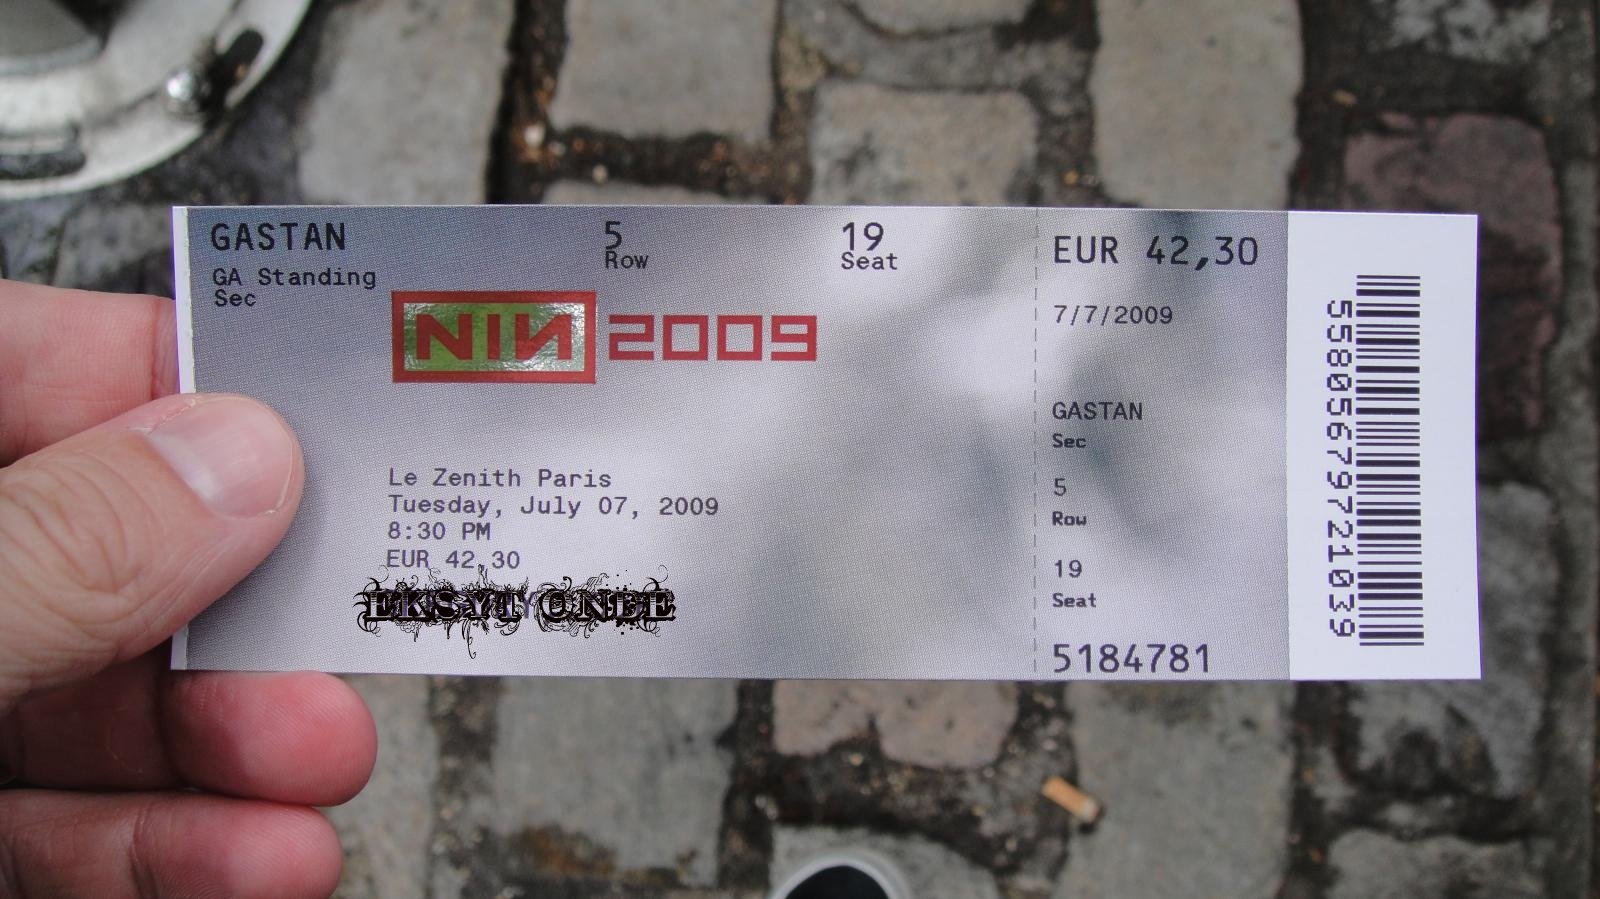 2009/07/07 Ticket